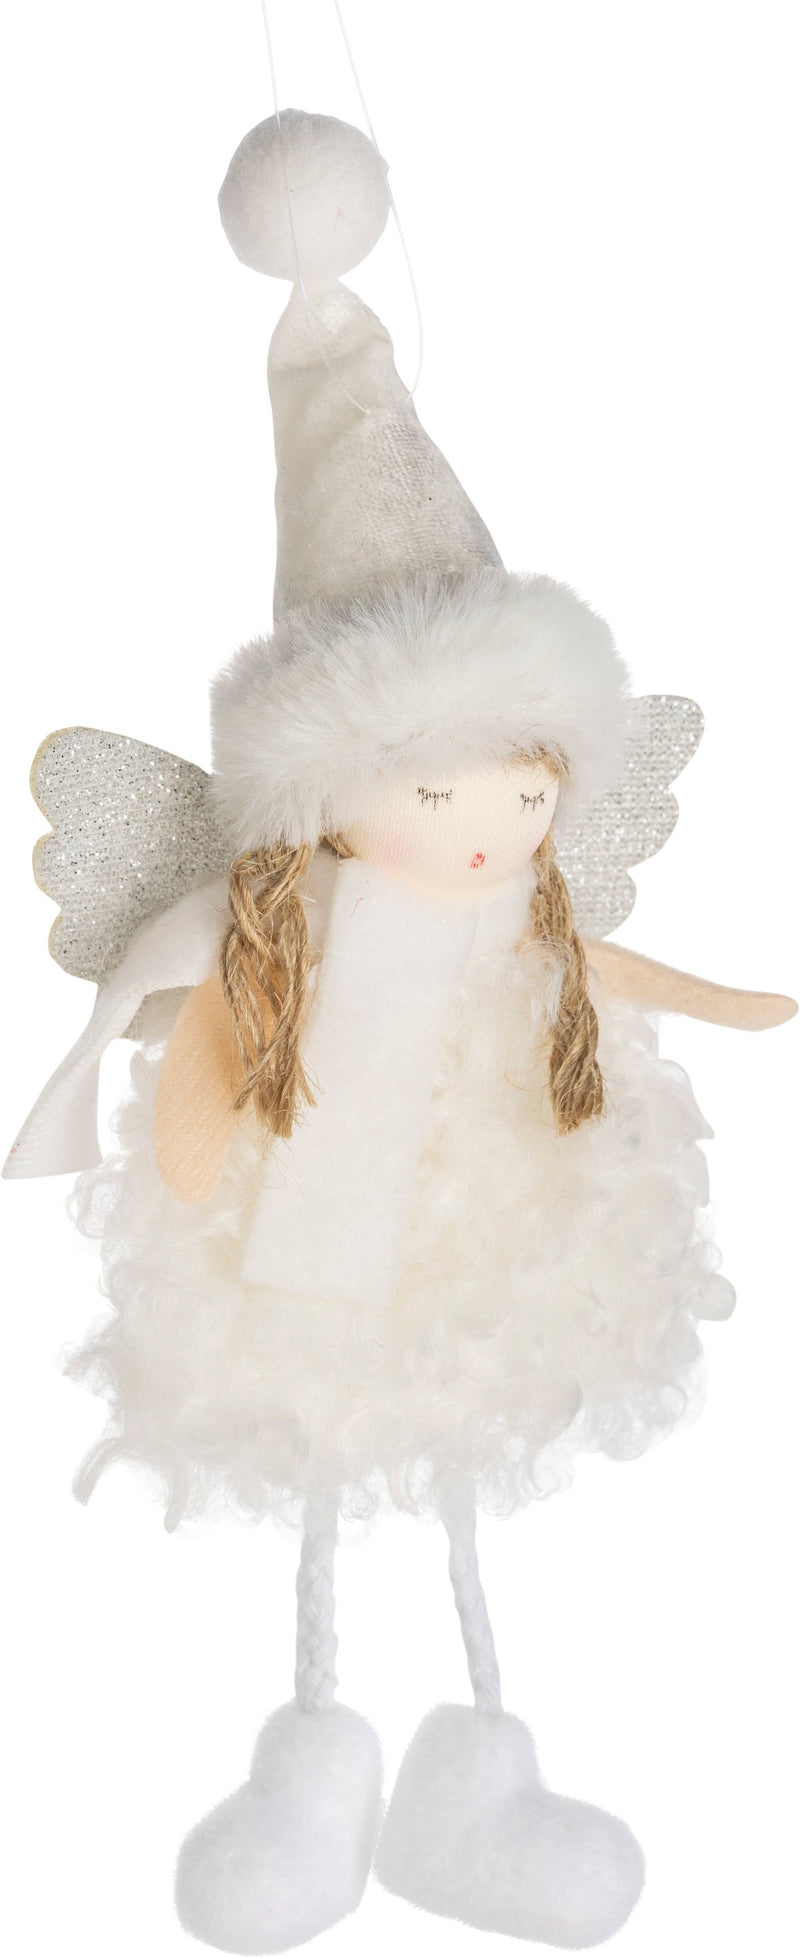 Singing angel with plush dress